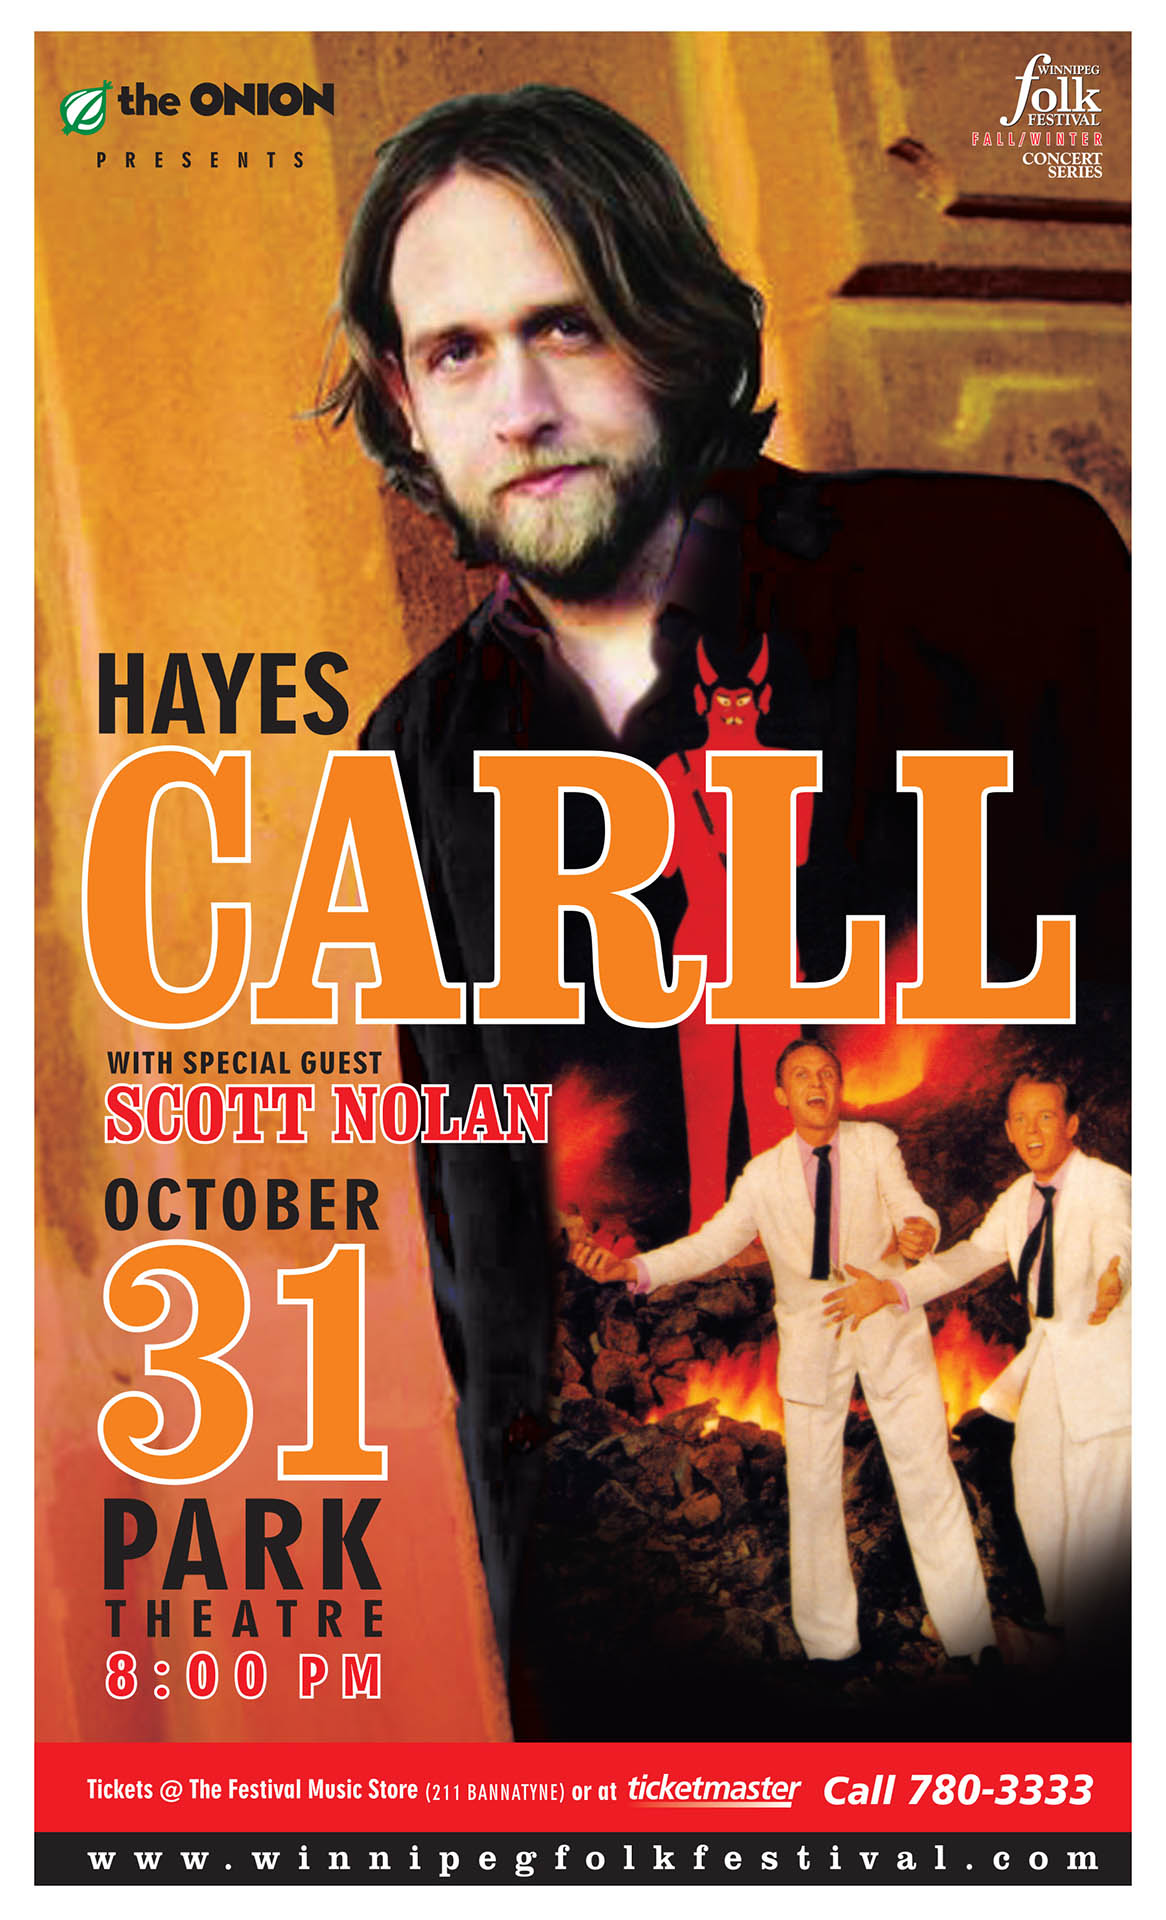 HAYES CARLL – 2008